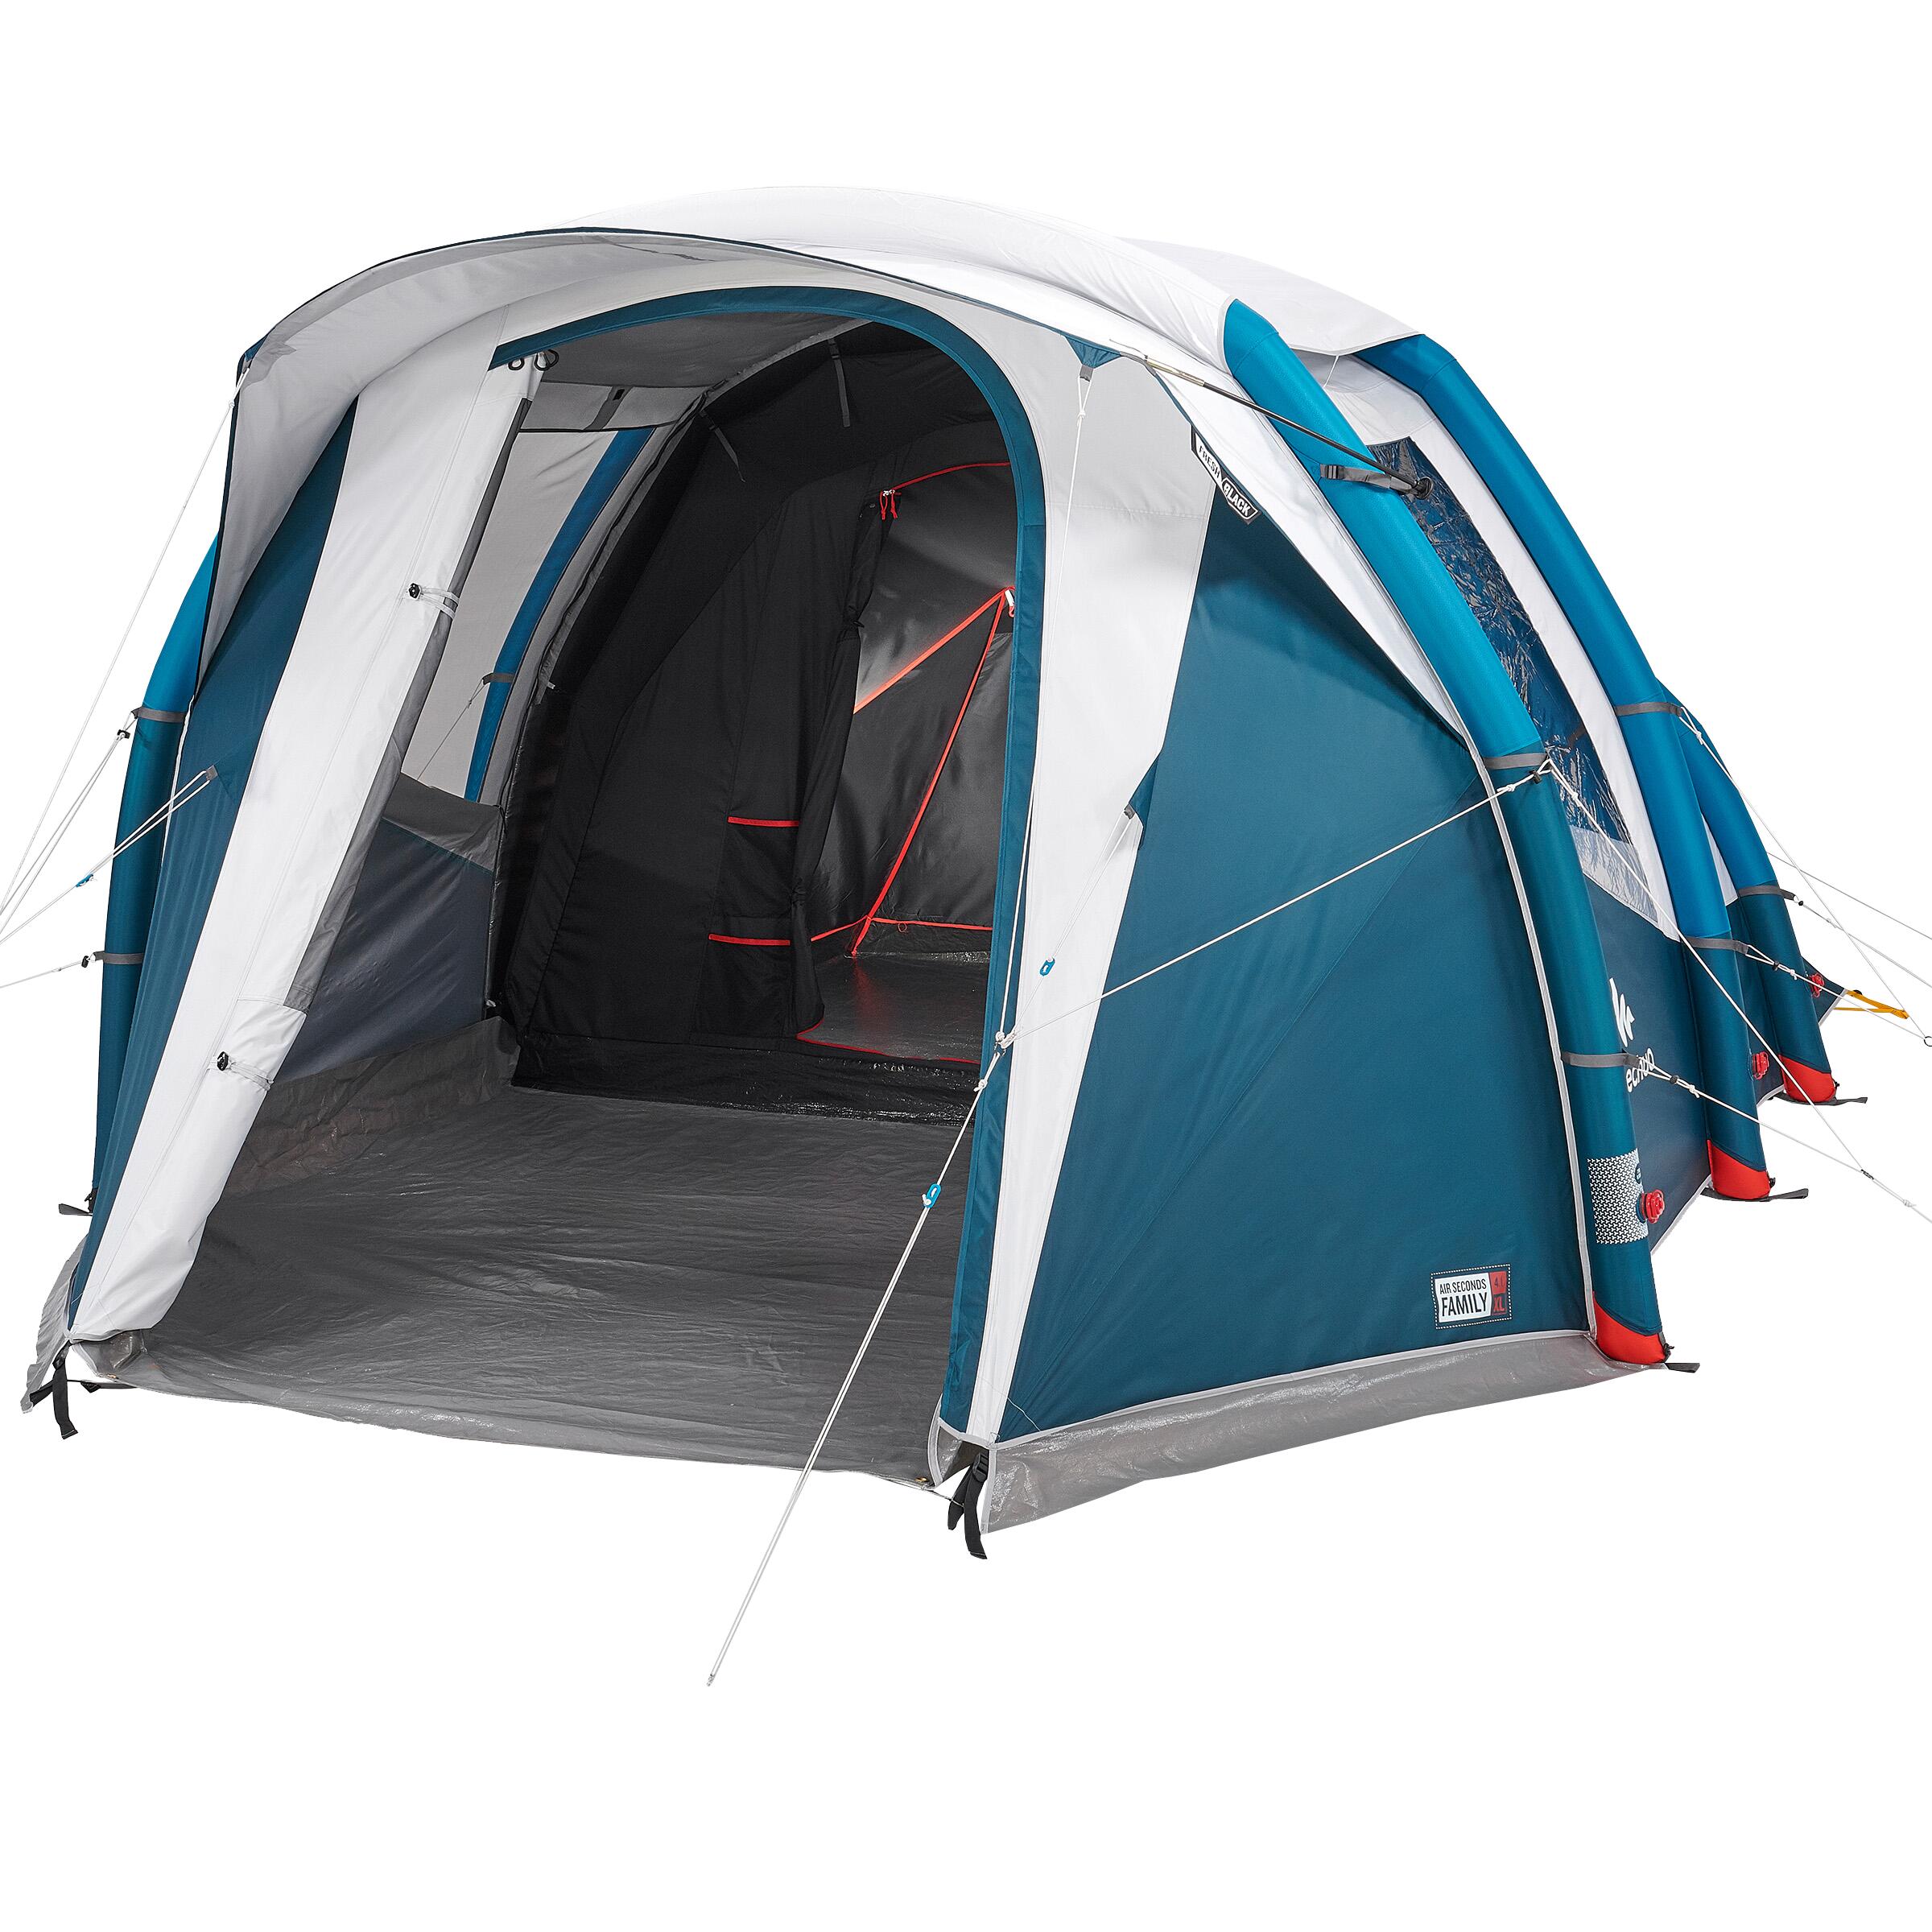 QUECHUA Inflatable Camping Tent Air Seconds 4.1 F&B 4 Person 1 Bedroom